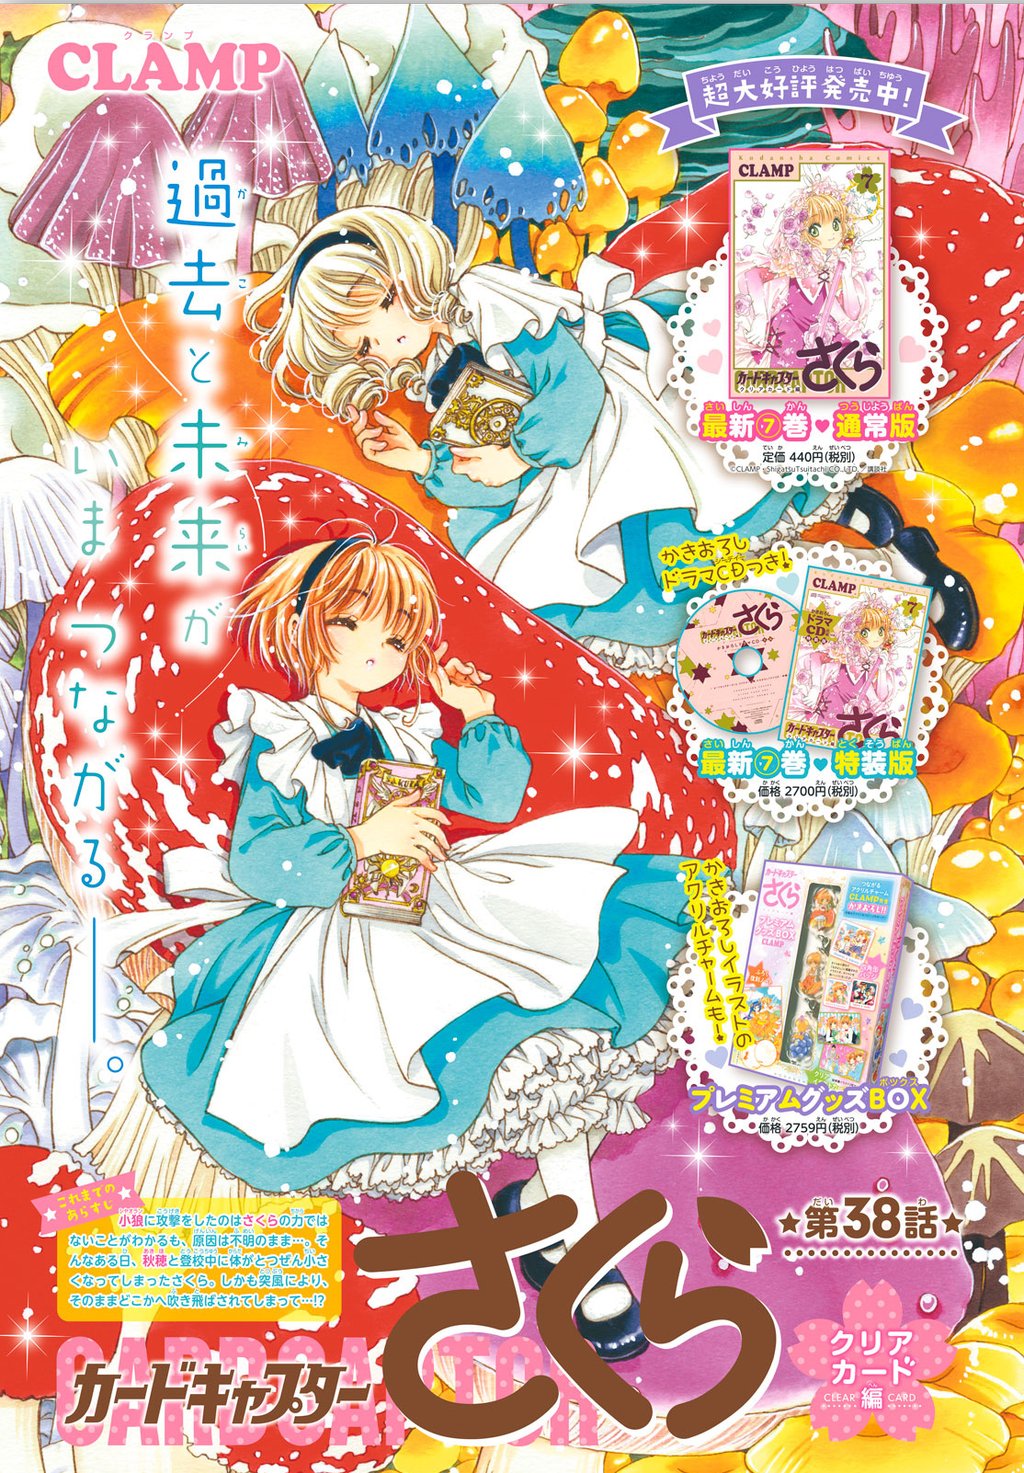 Card Captor Sakura – Clear Card arc – Chapter 51